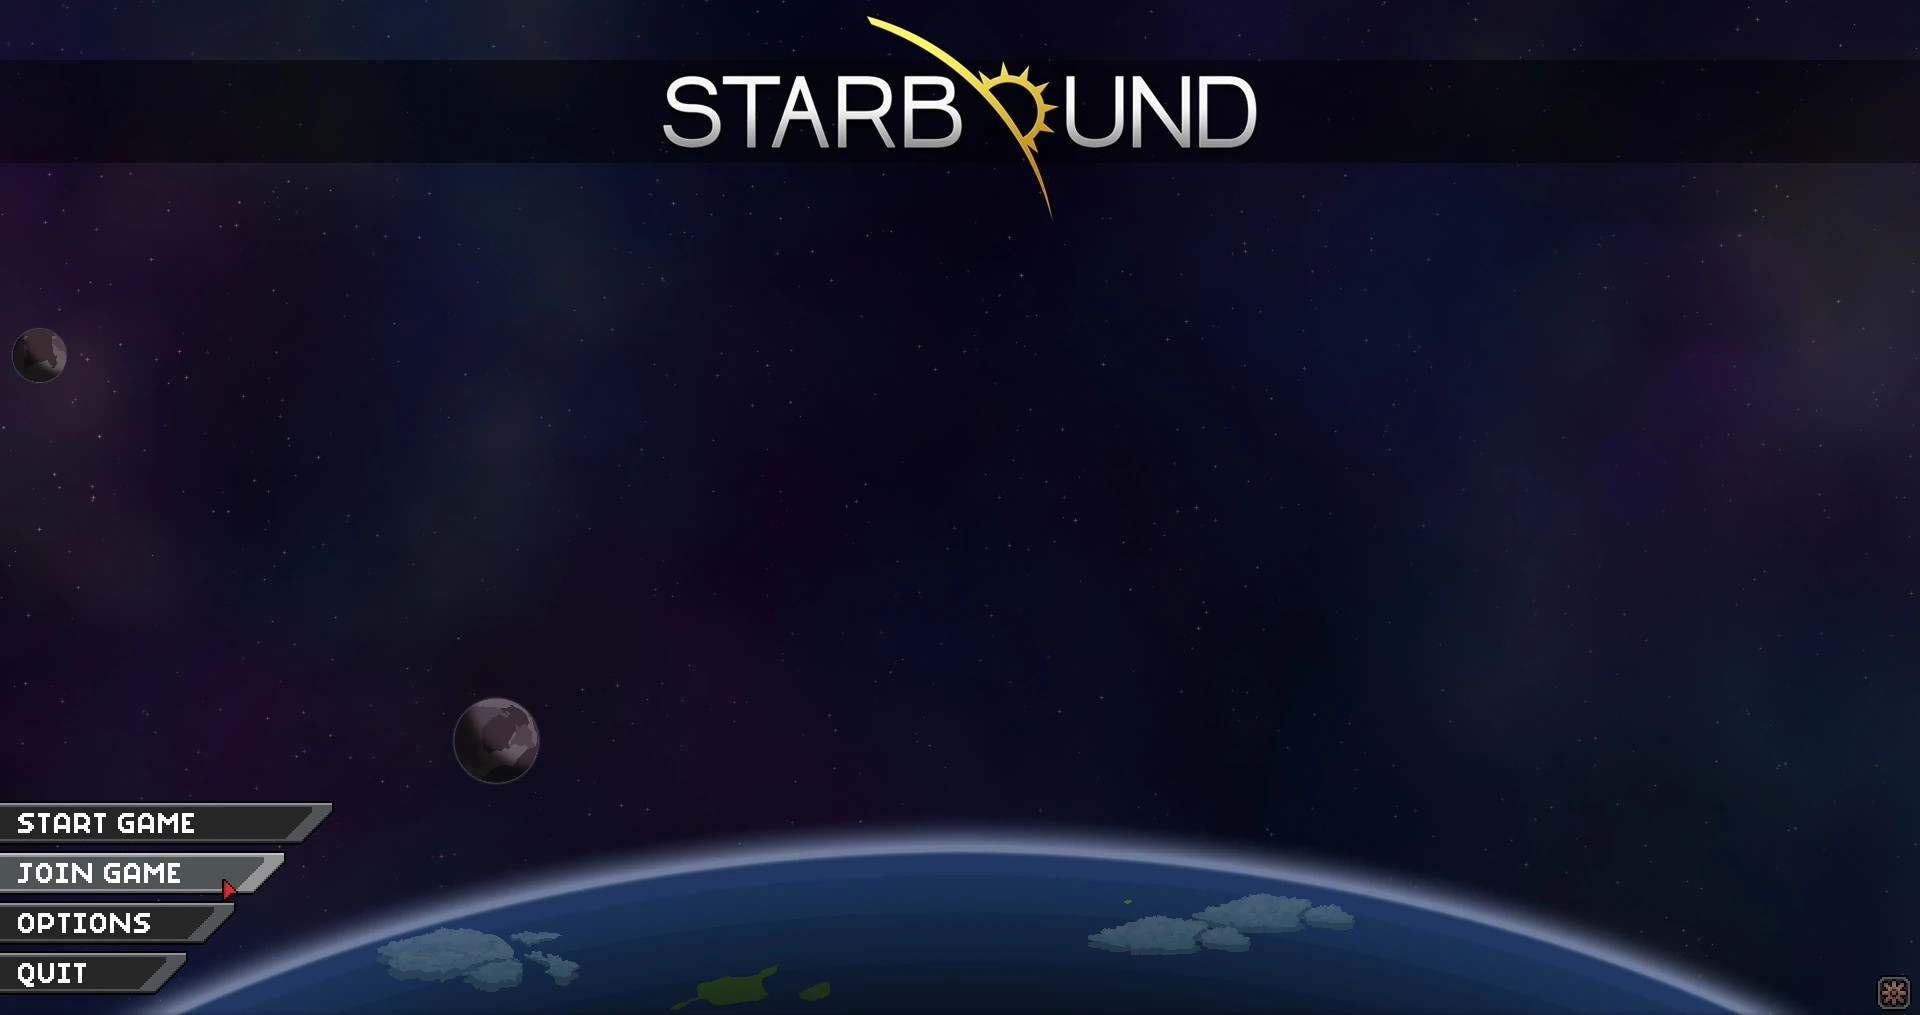 The Starbound main menu